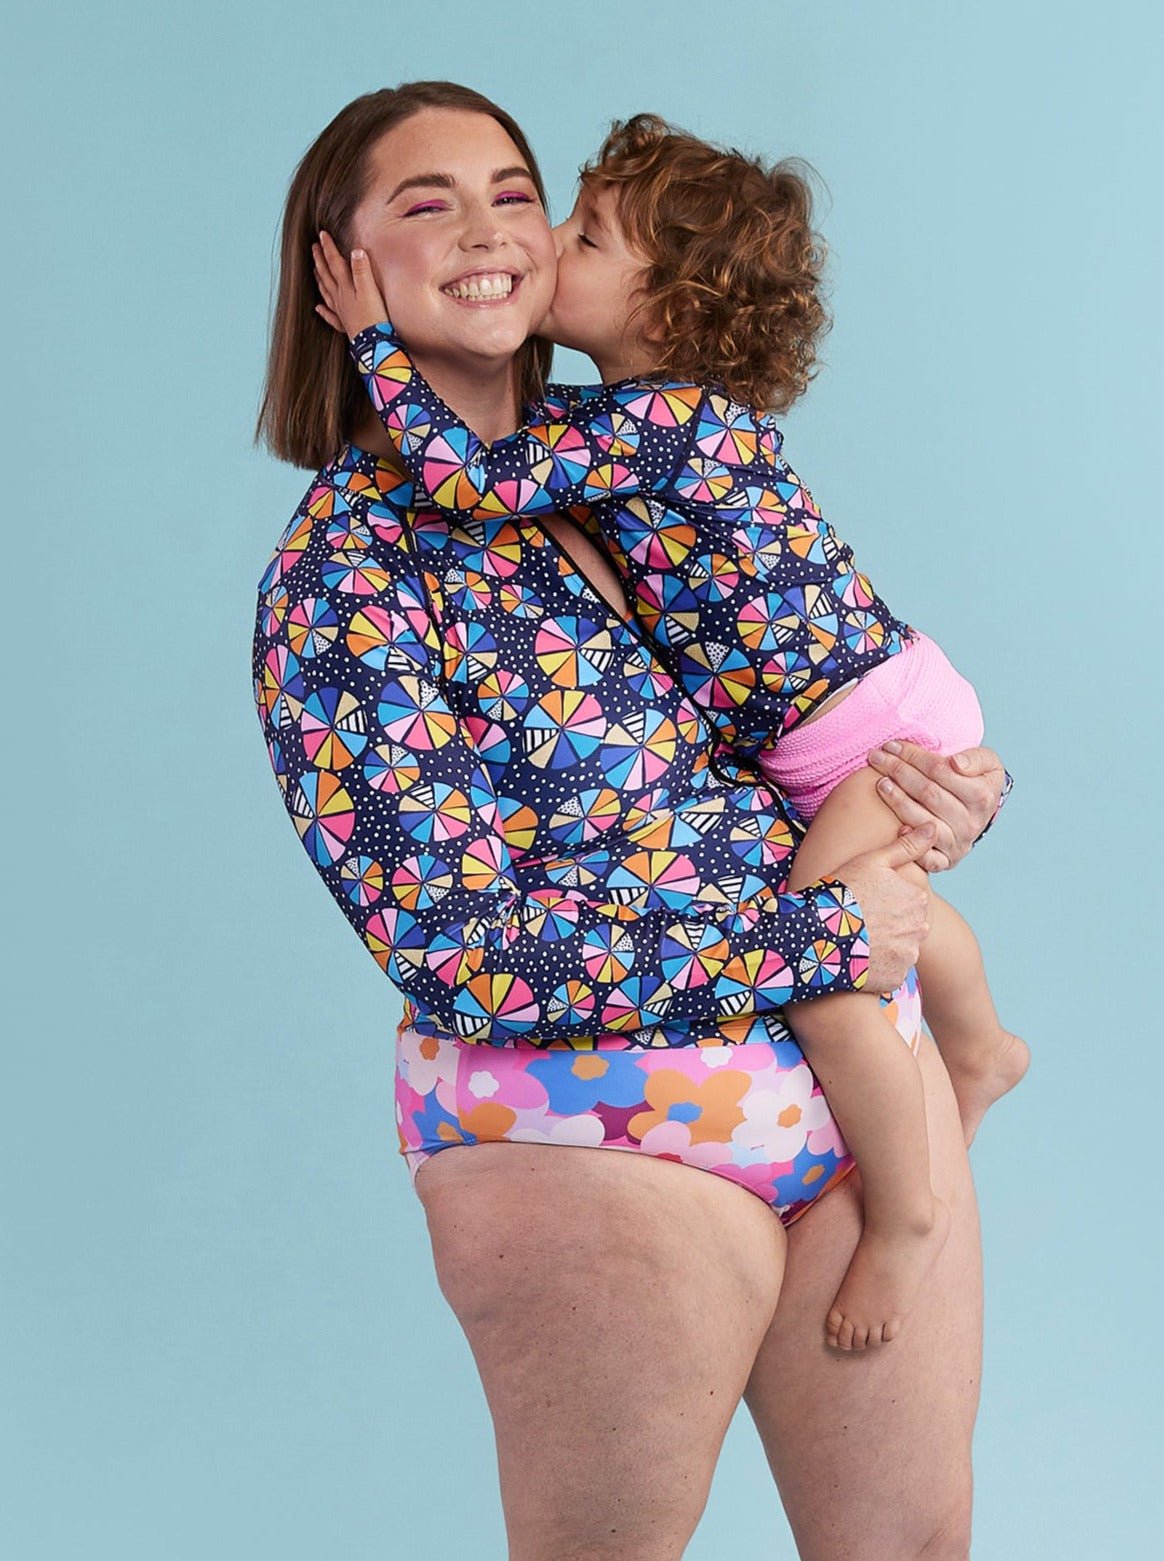 Colour Wheel Kids Long-Sleeved Rashie Top - mummy and me swimwear